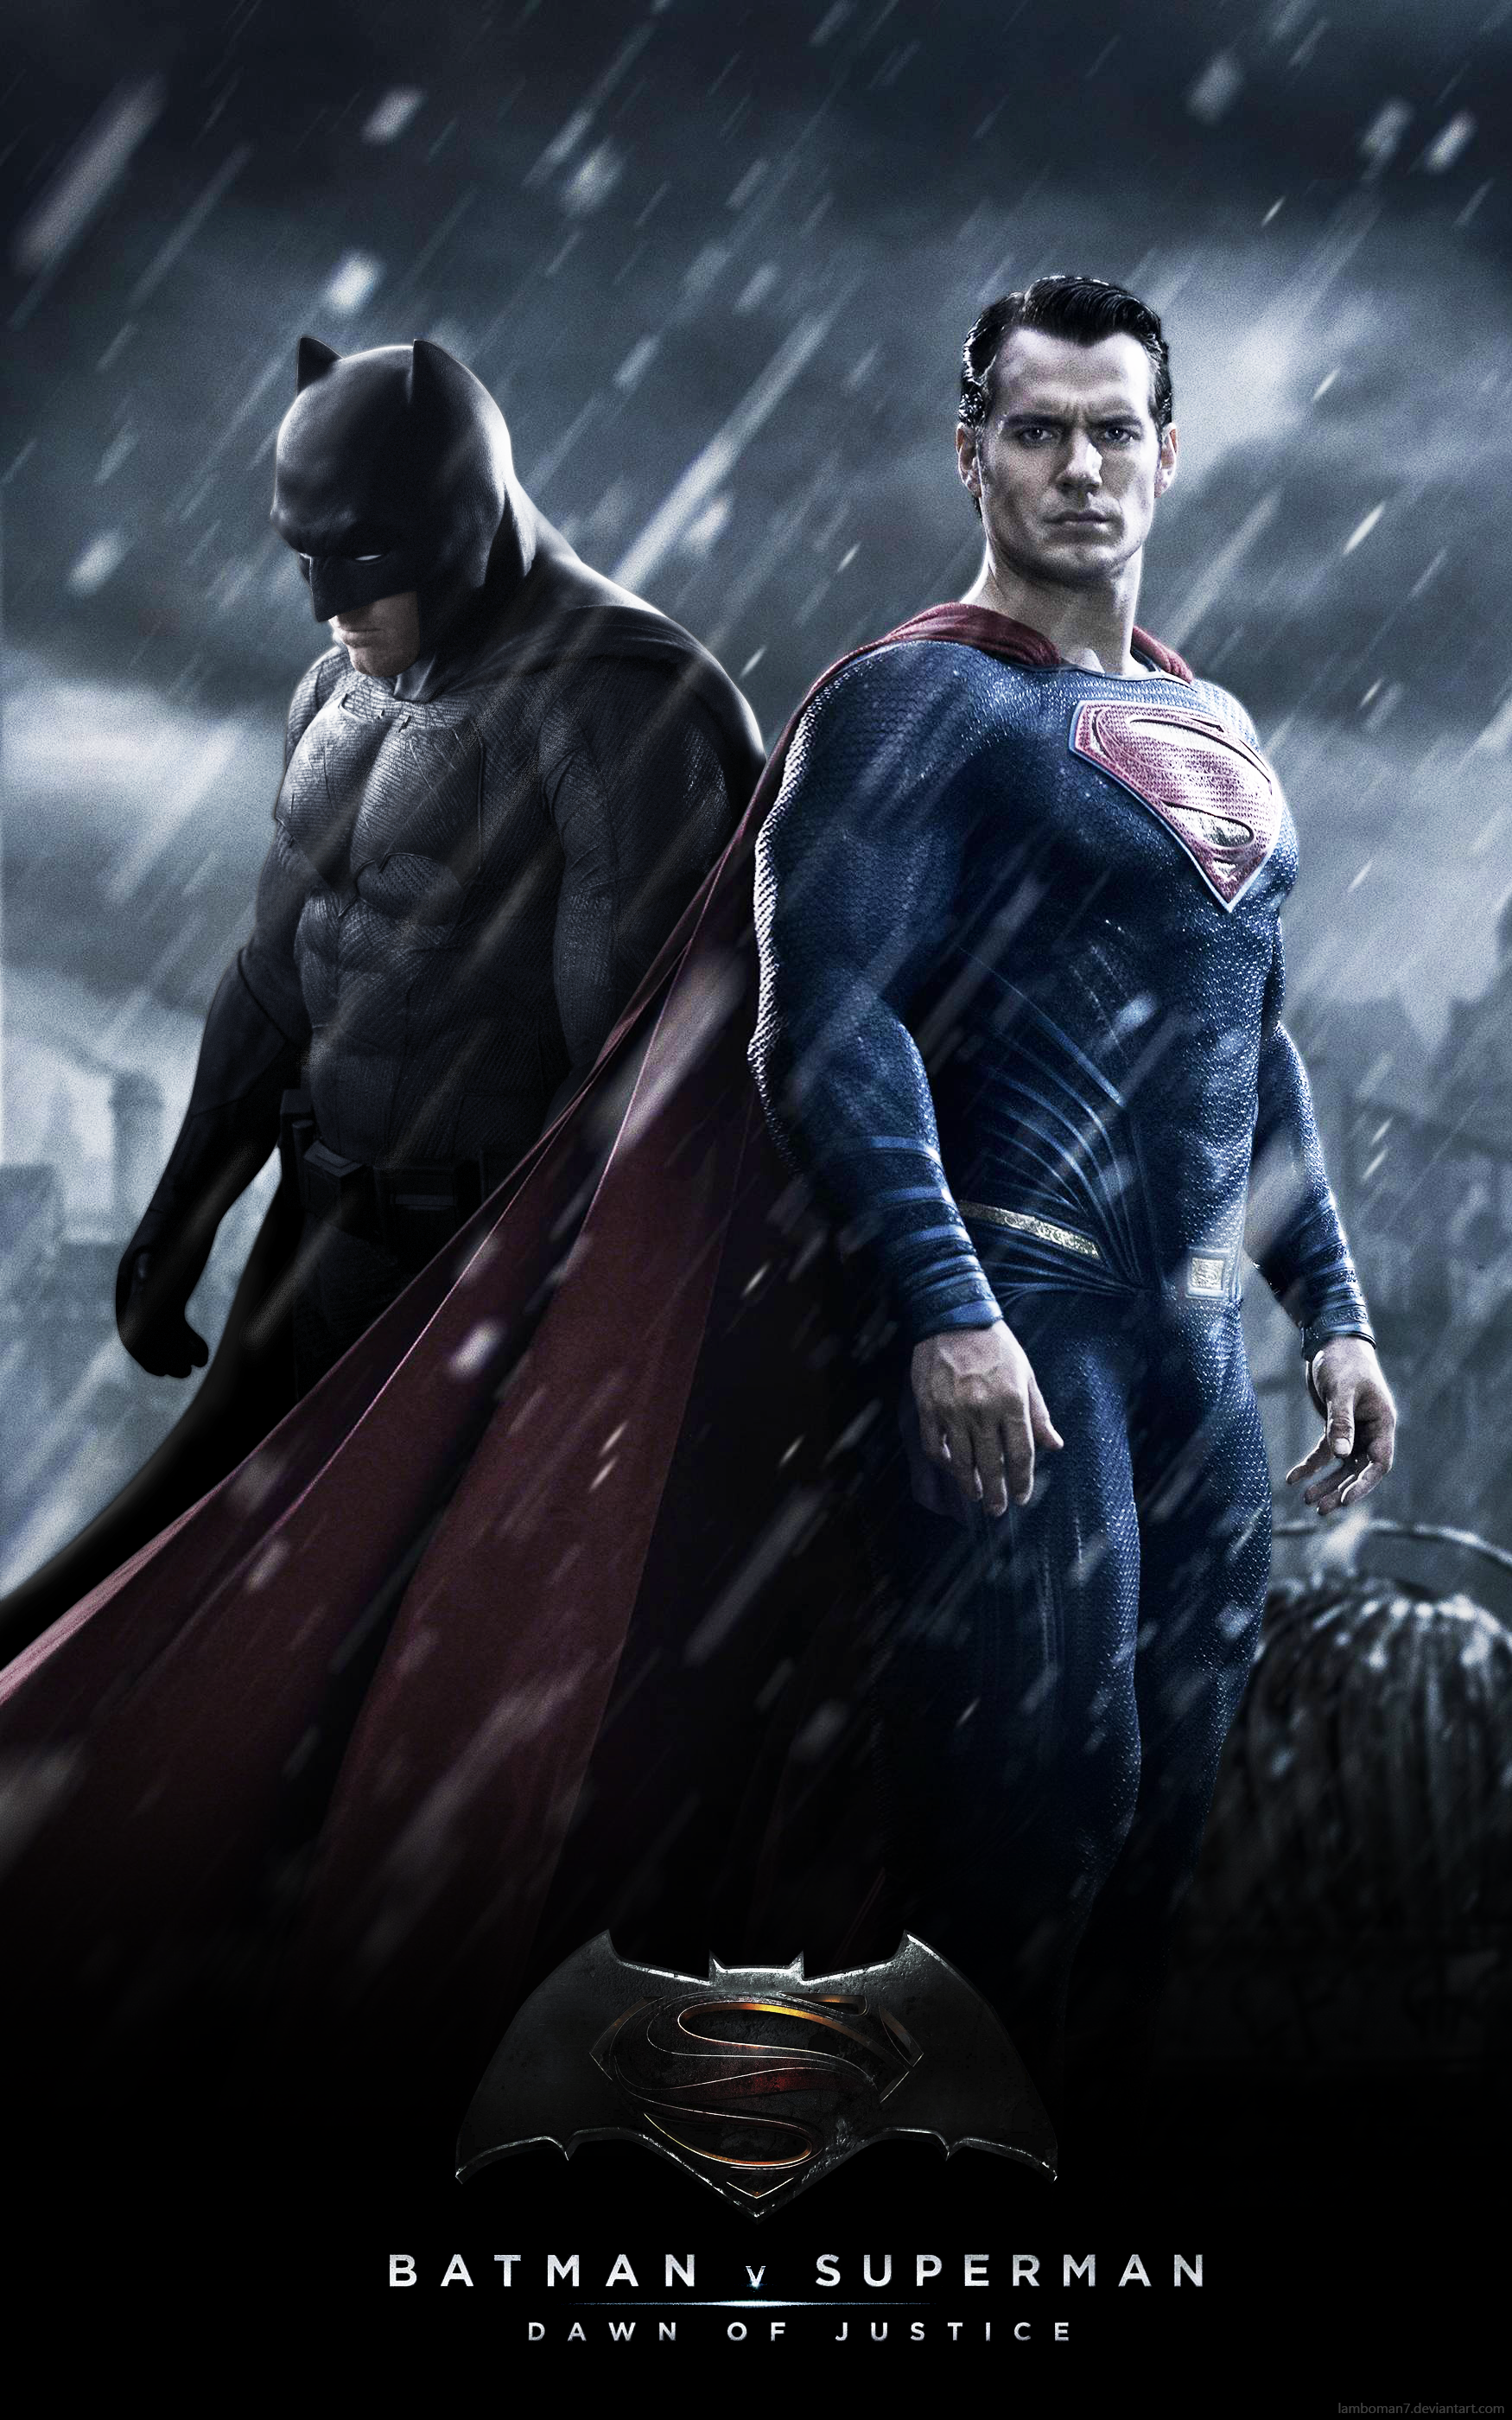 batman_v_superman___dawn_of_justice_poster_by_lamboman7-d7p1x88.png